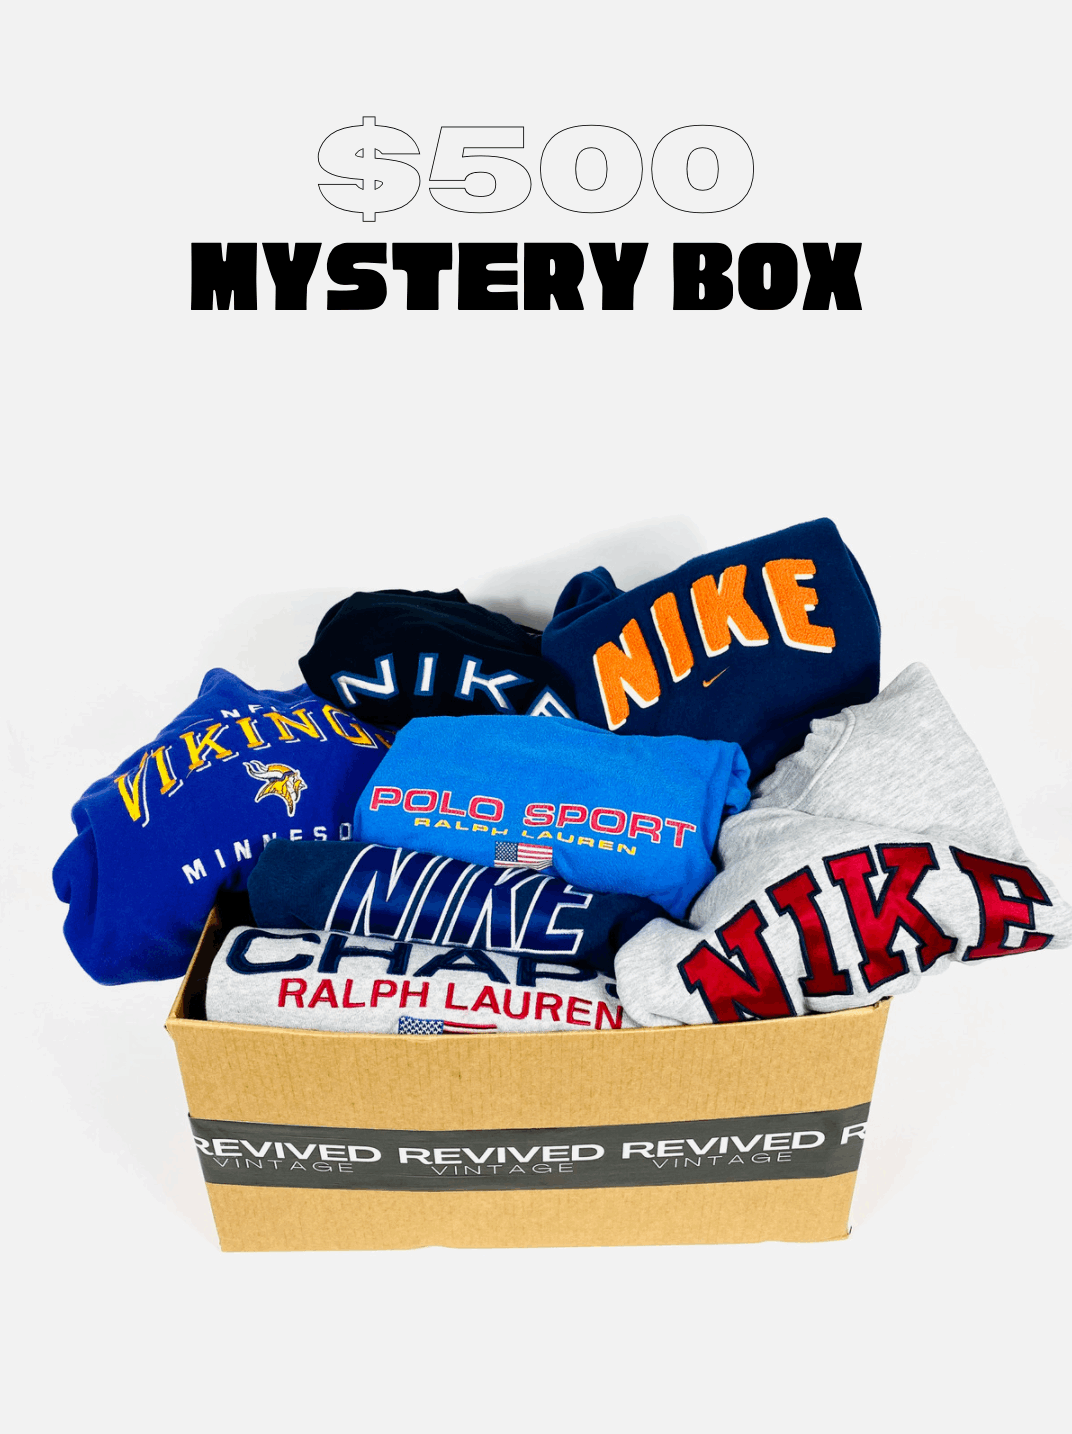 Revived Vintage $500 Mystery Box